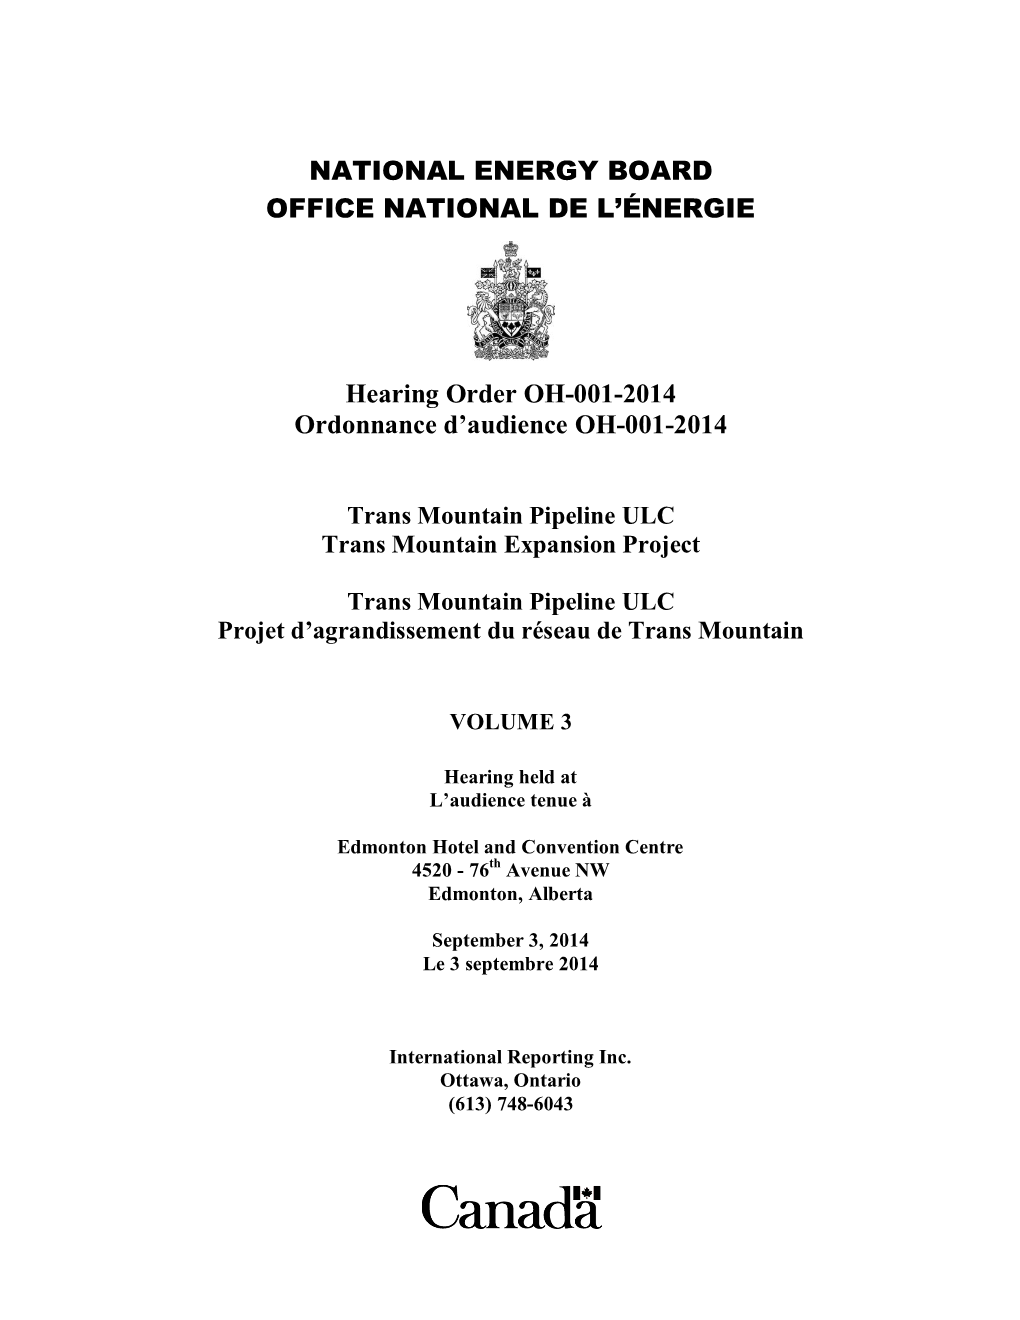 NEB Trans Mountain Pipeline Expansion Hearing Transcripts, Volume 3, Sept. 3, 2014